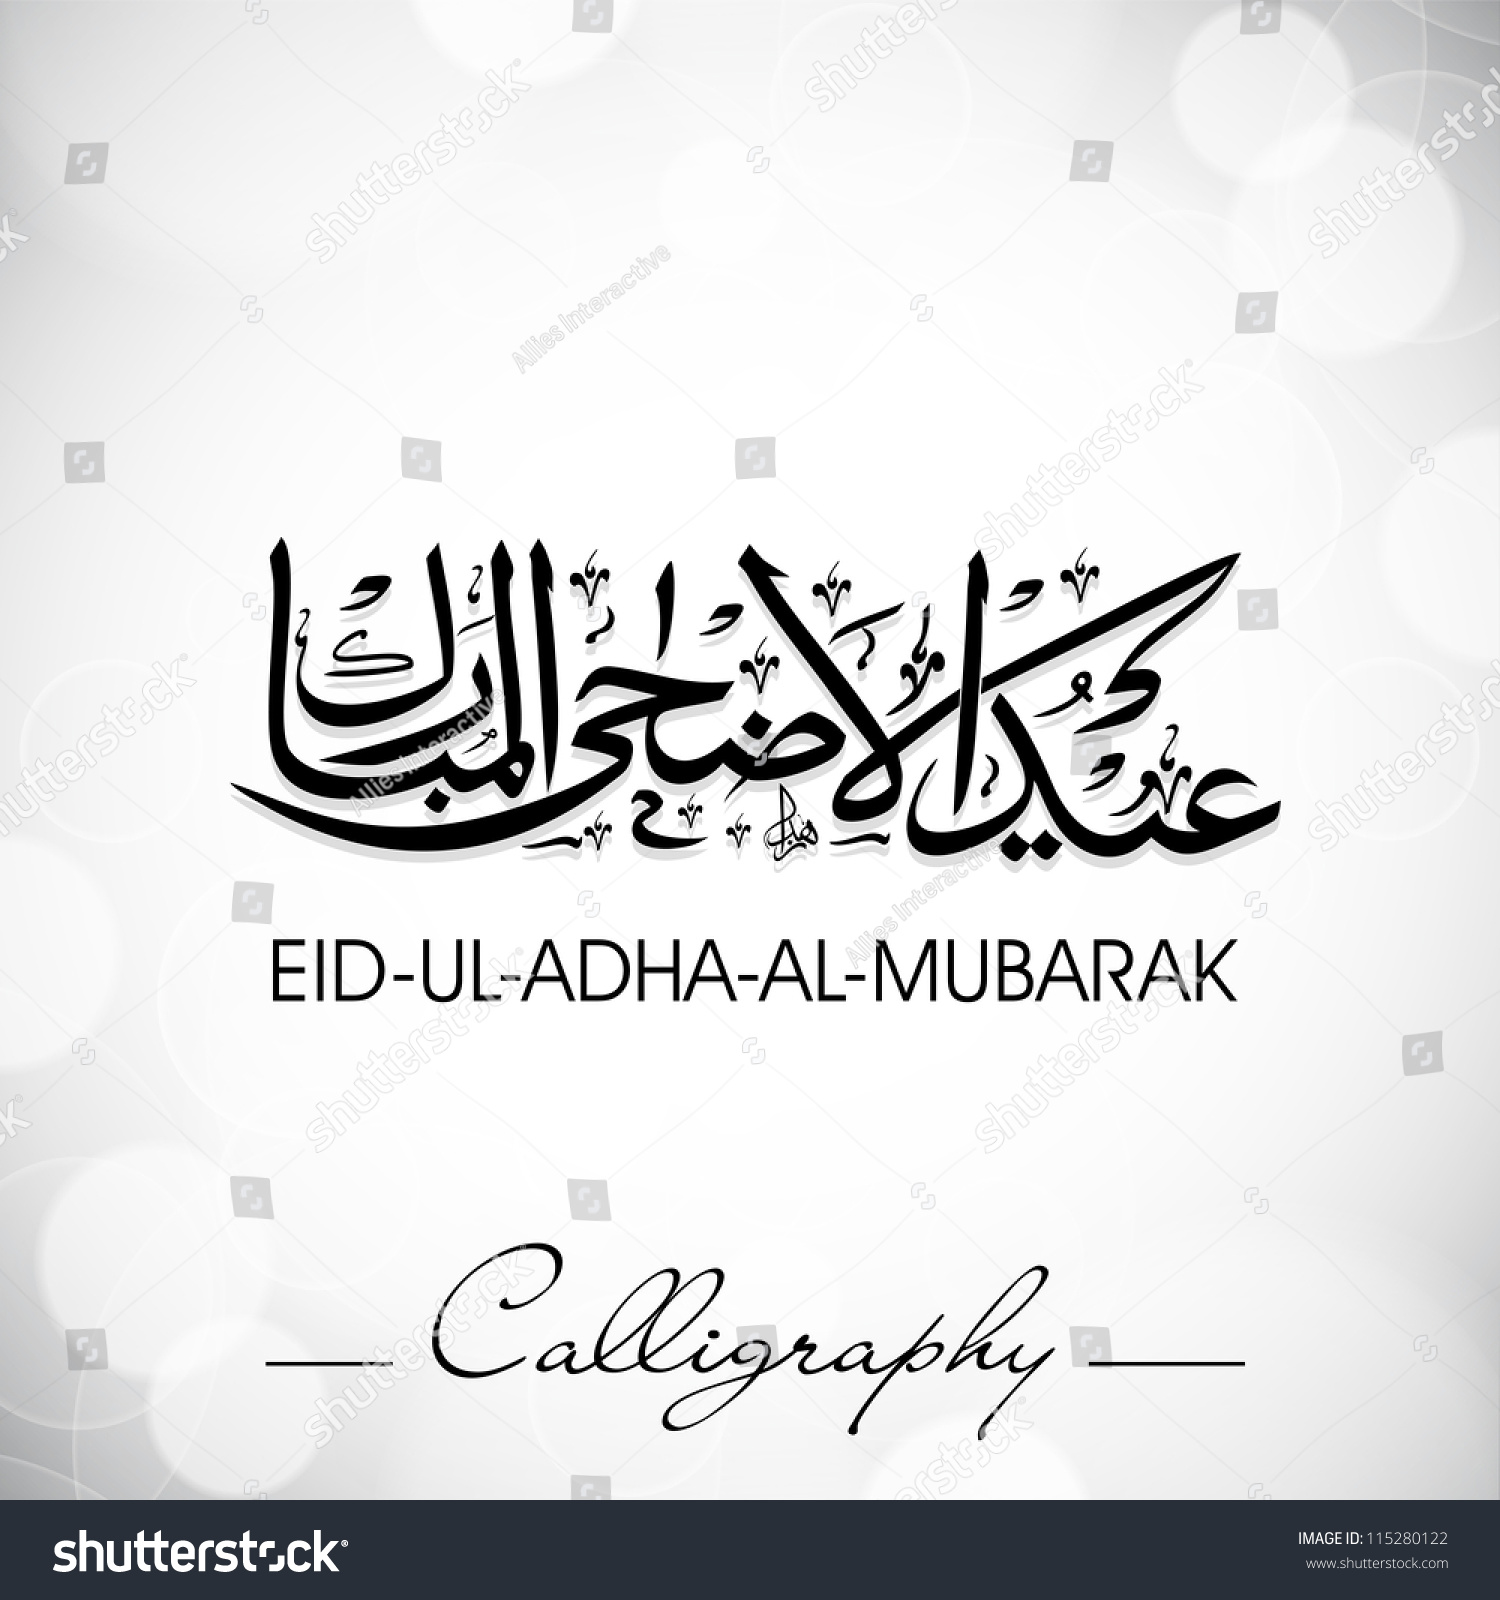 Royalty-free Eid-Ul-Adha-Al-Mubarak or Eid-Ul-Azha 